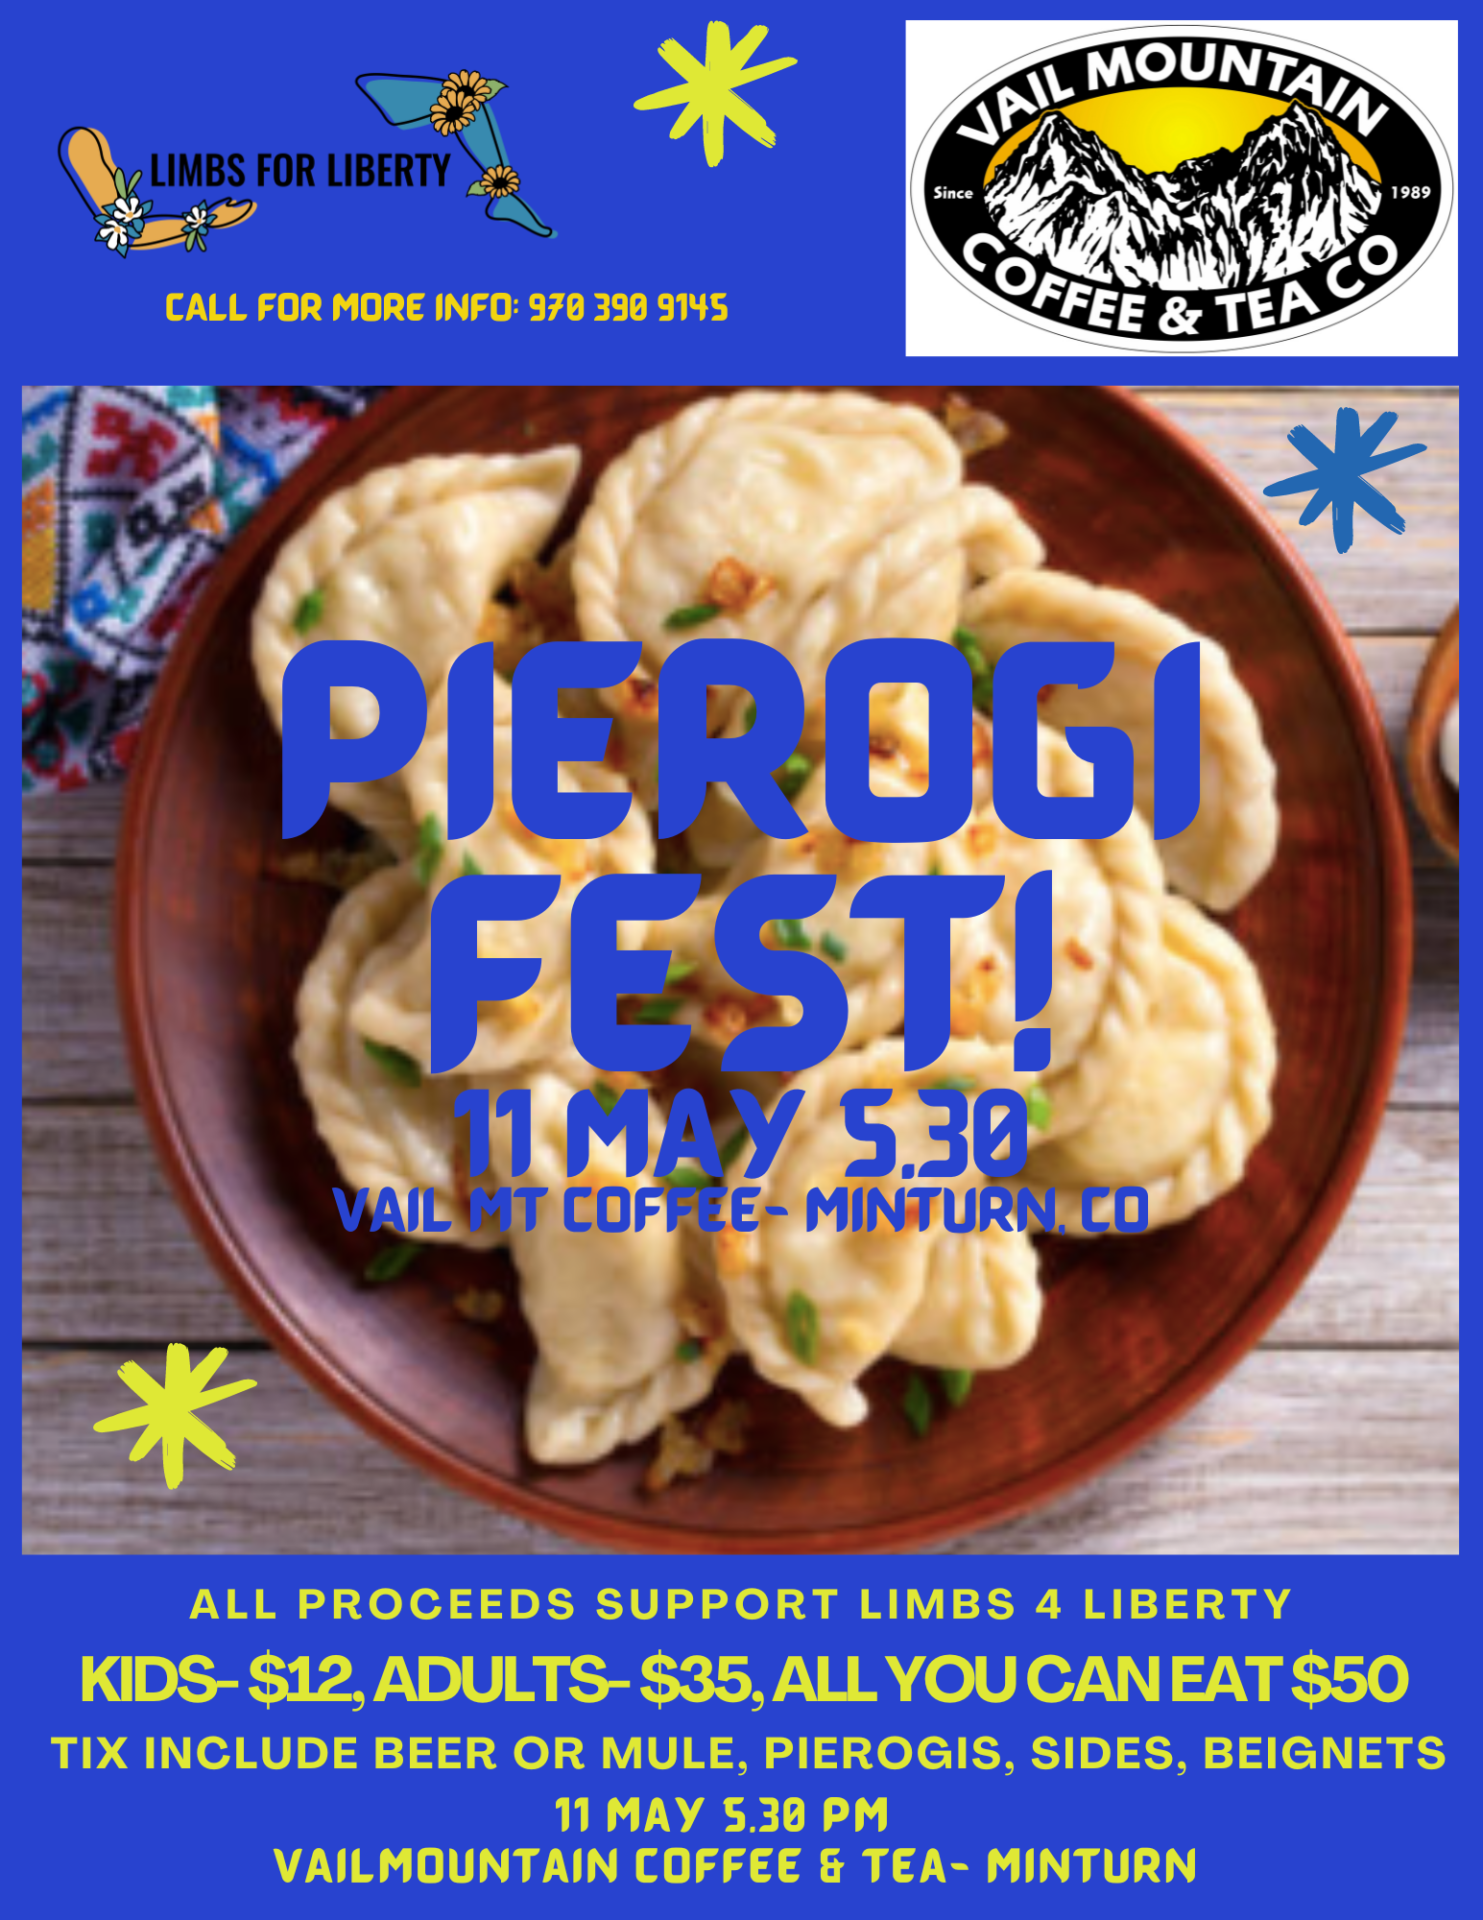 Pierogi Fest for Limbs 4 Liberty